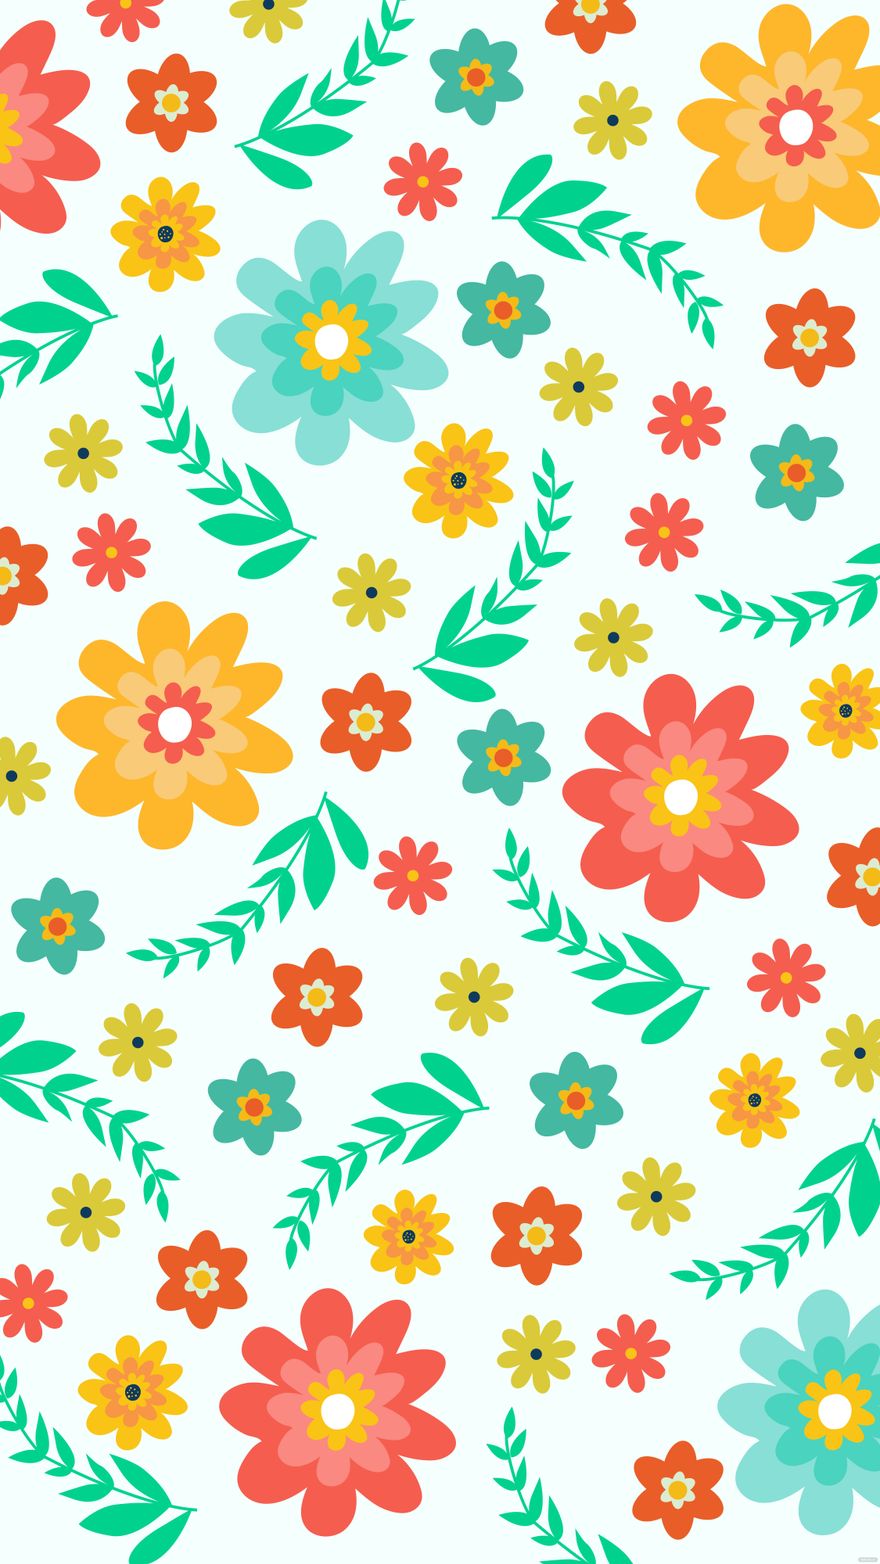 Free Summer Floral Seamless Background in Illustrator, EPS, SVG, JPG